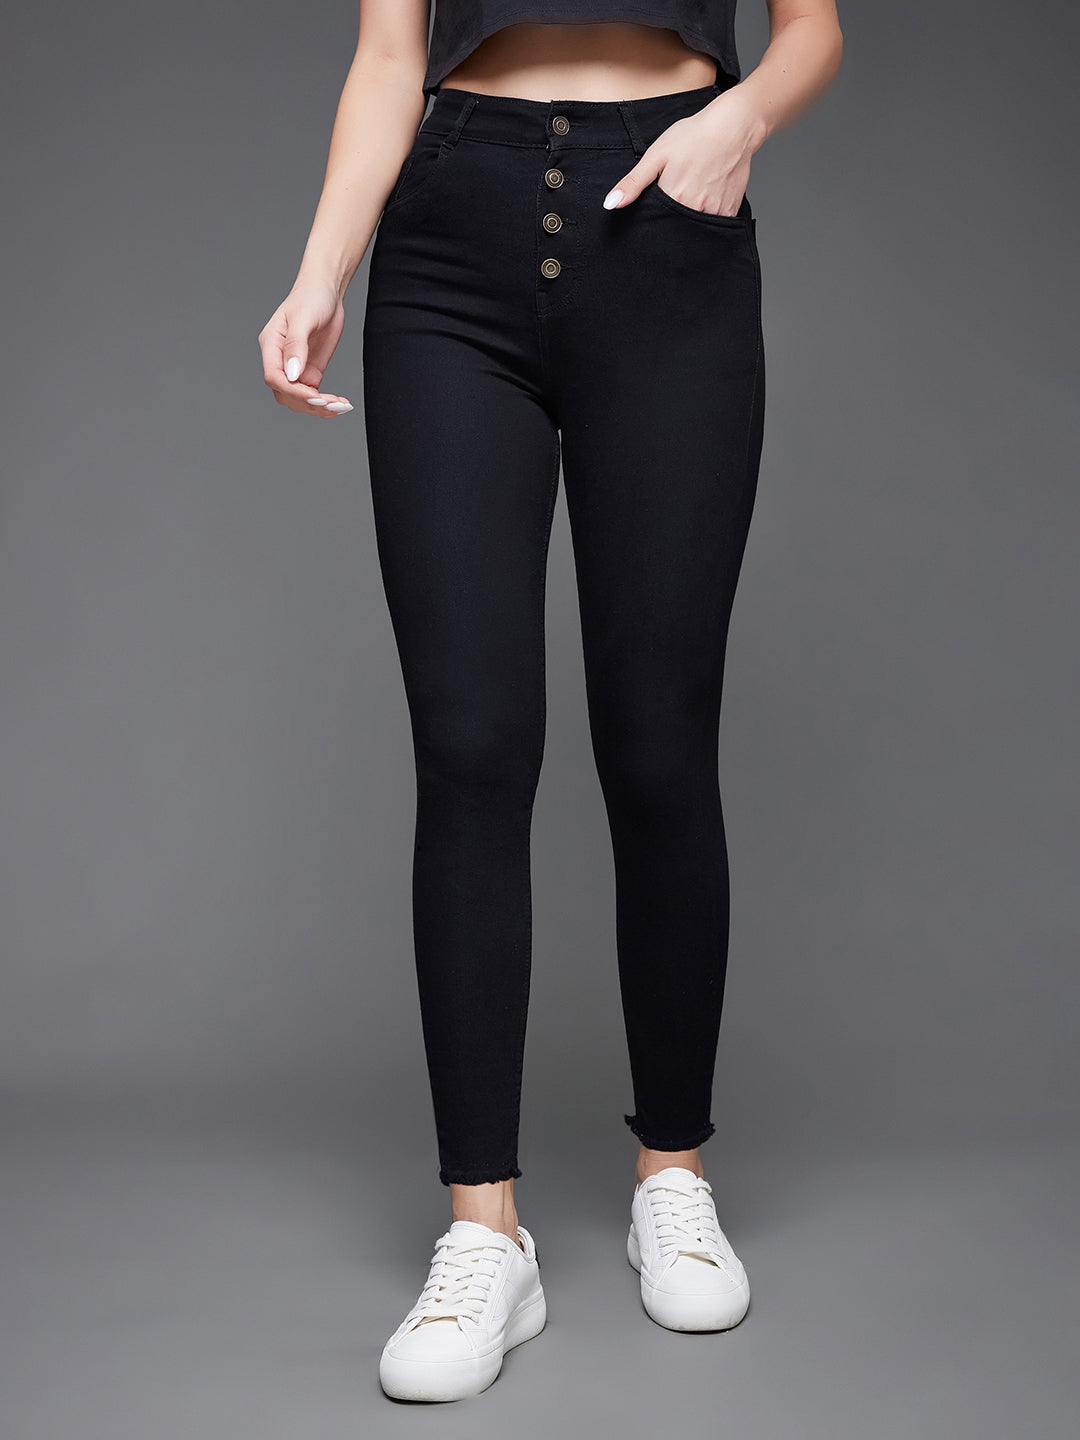 Black Skinny High Rise Clean Look Cropped Fringed Hemline Solid Stretchable Denim Jeans